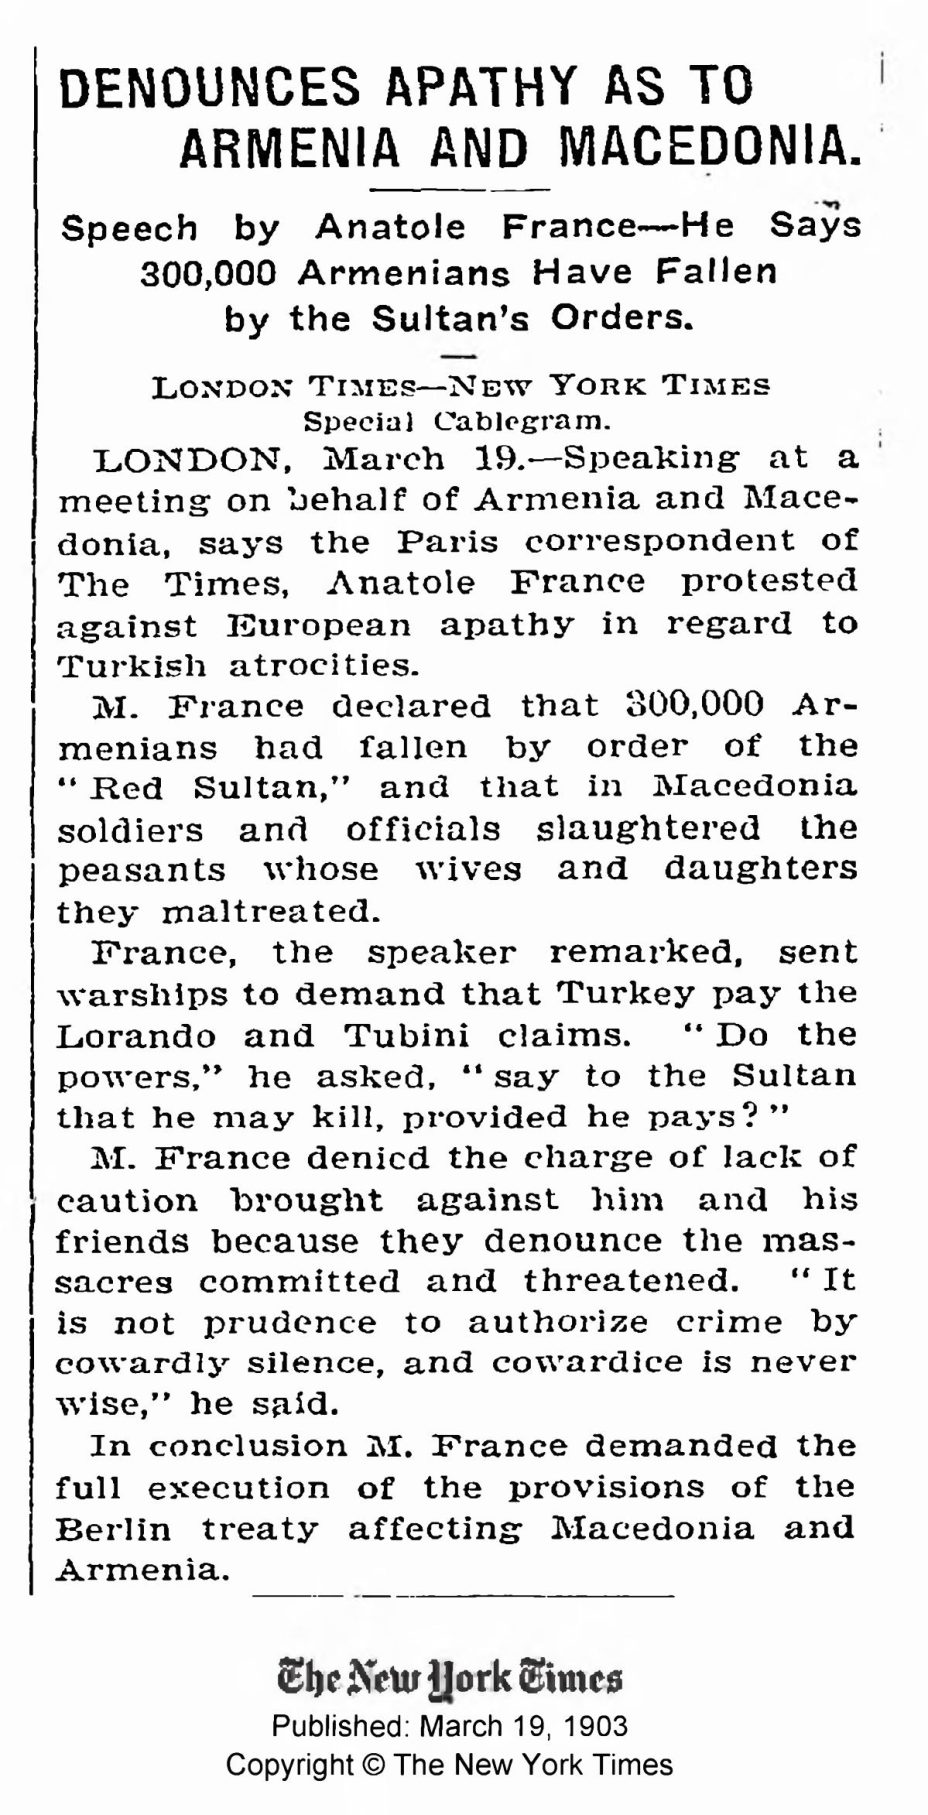 1903.03.19_The New York Times - Armenia and Macedonia